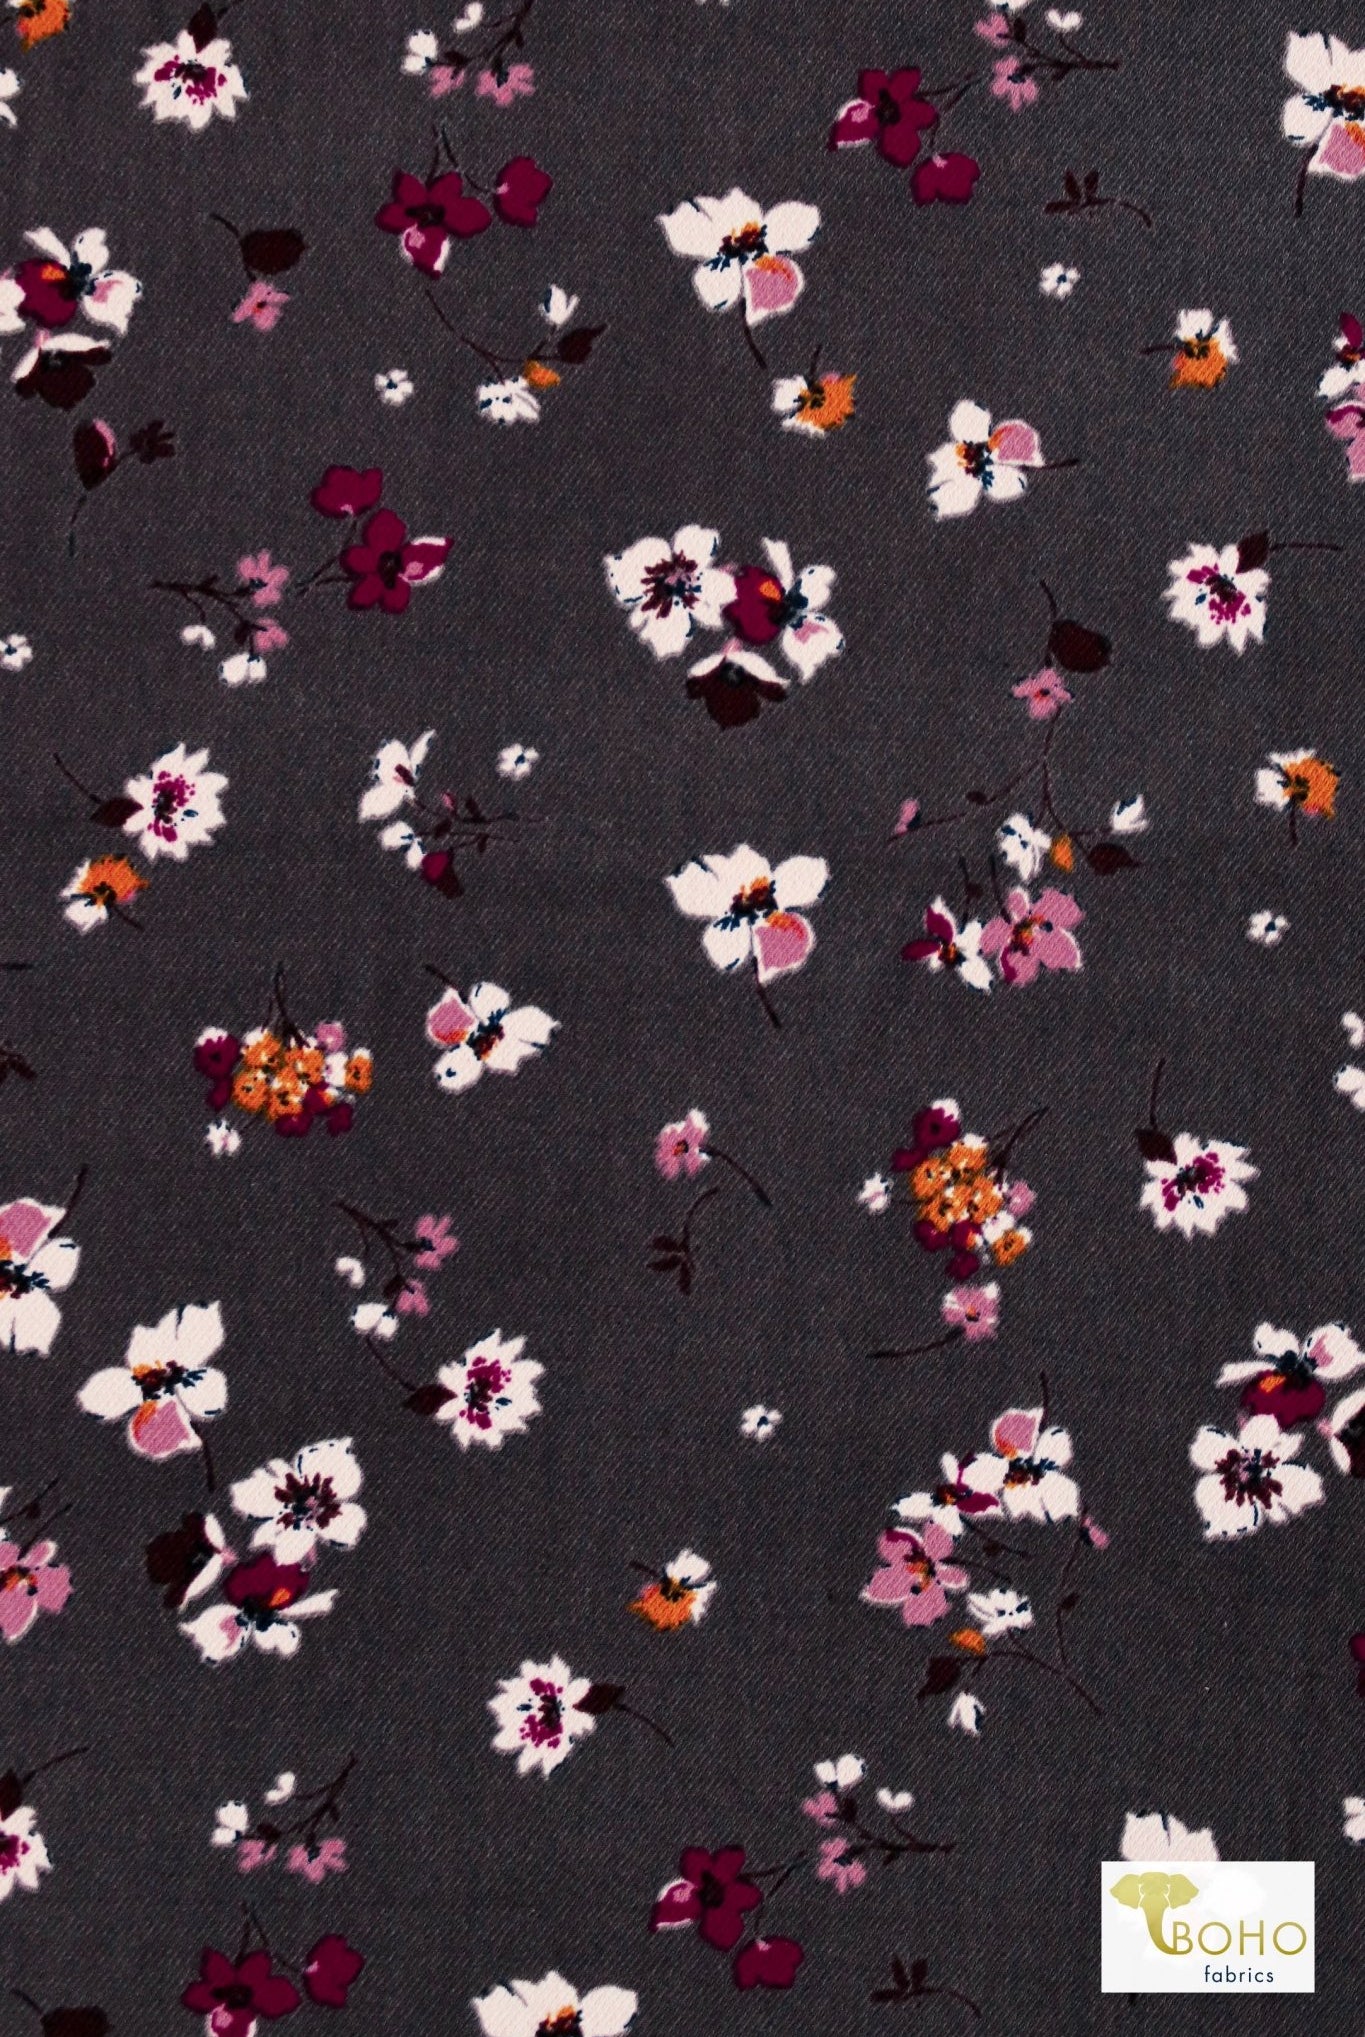 Florals on Gray, Twill Woven - Boho Fabrics